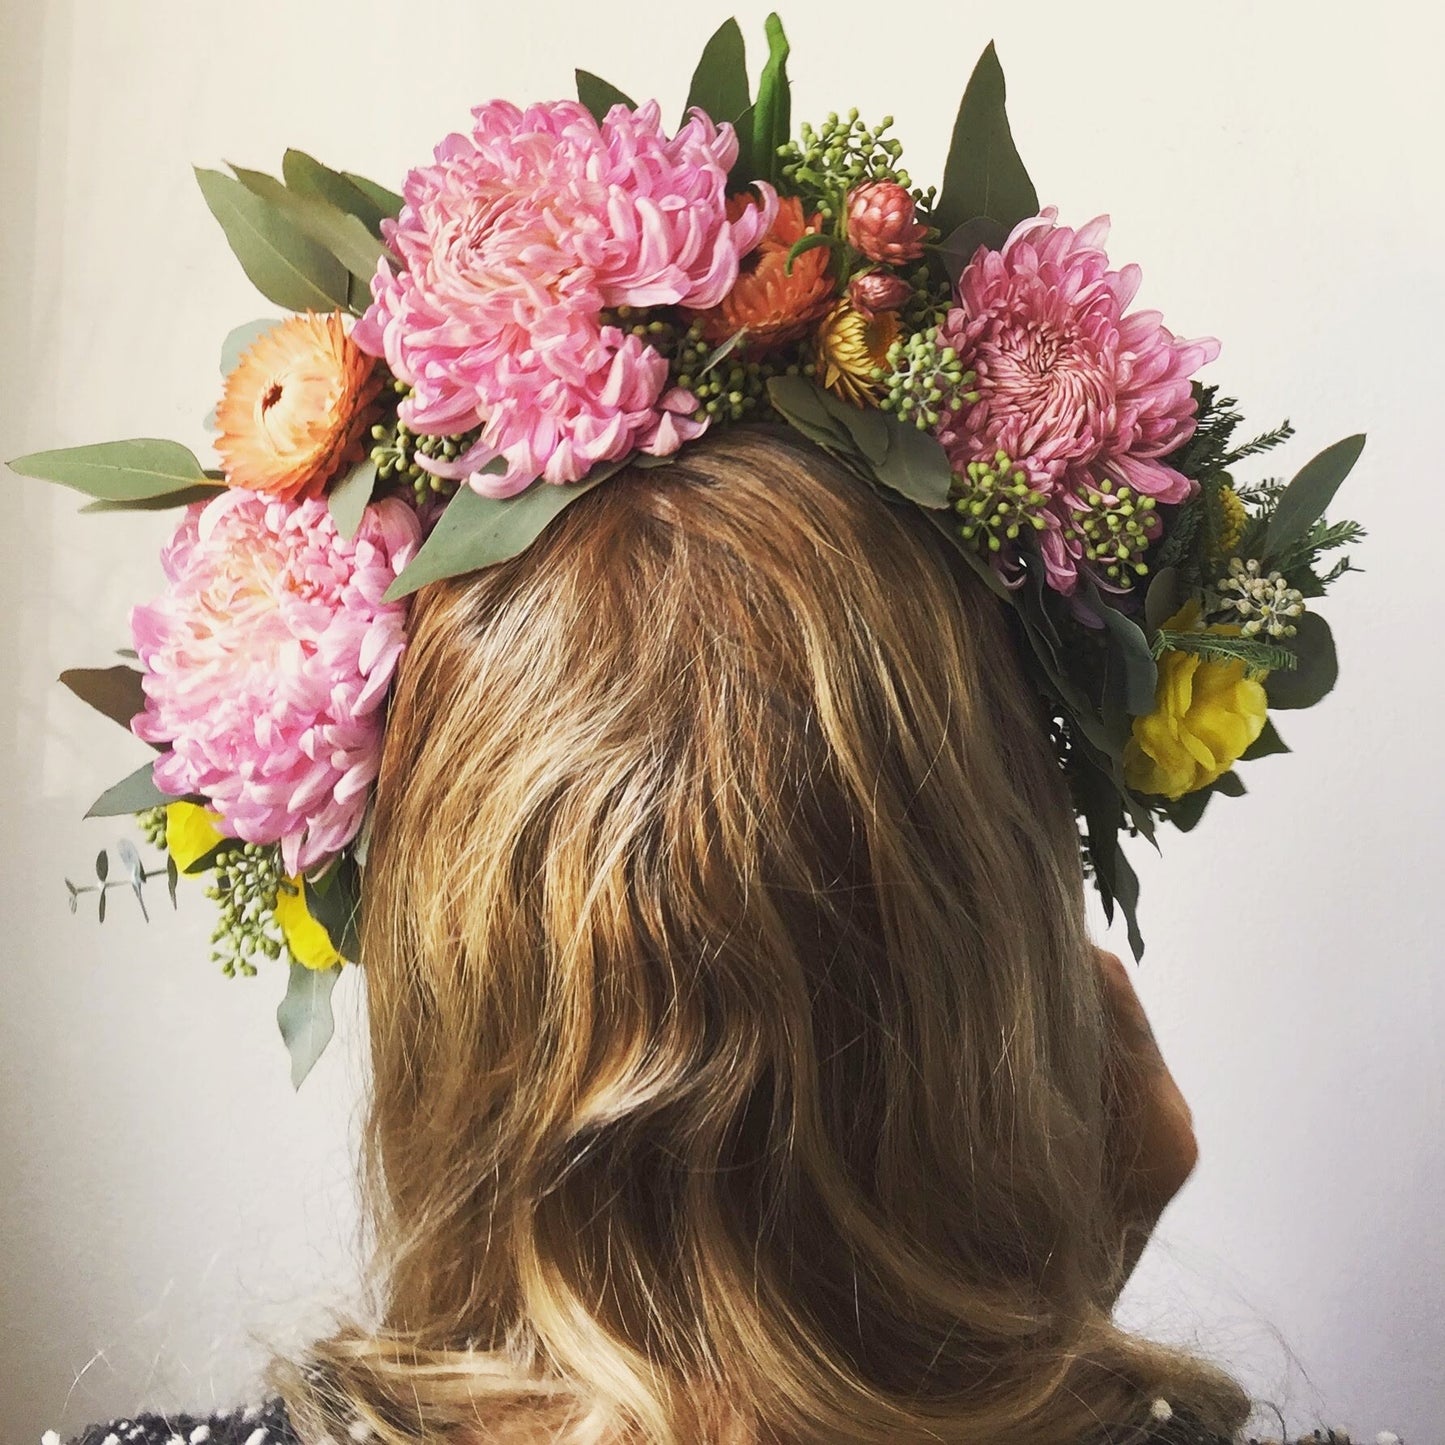 Flower crown with mums, strawflowers, eucalyptus.